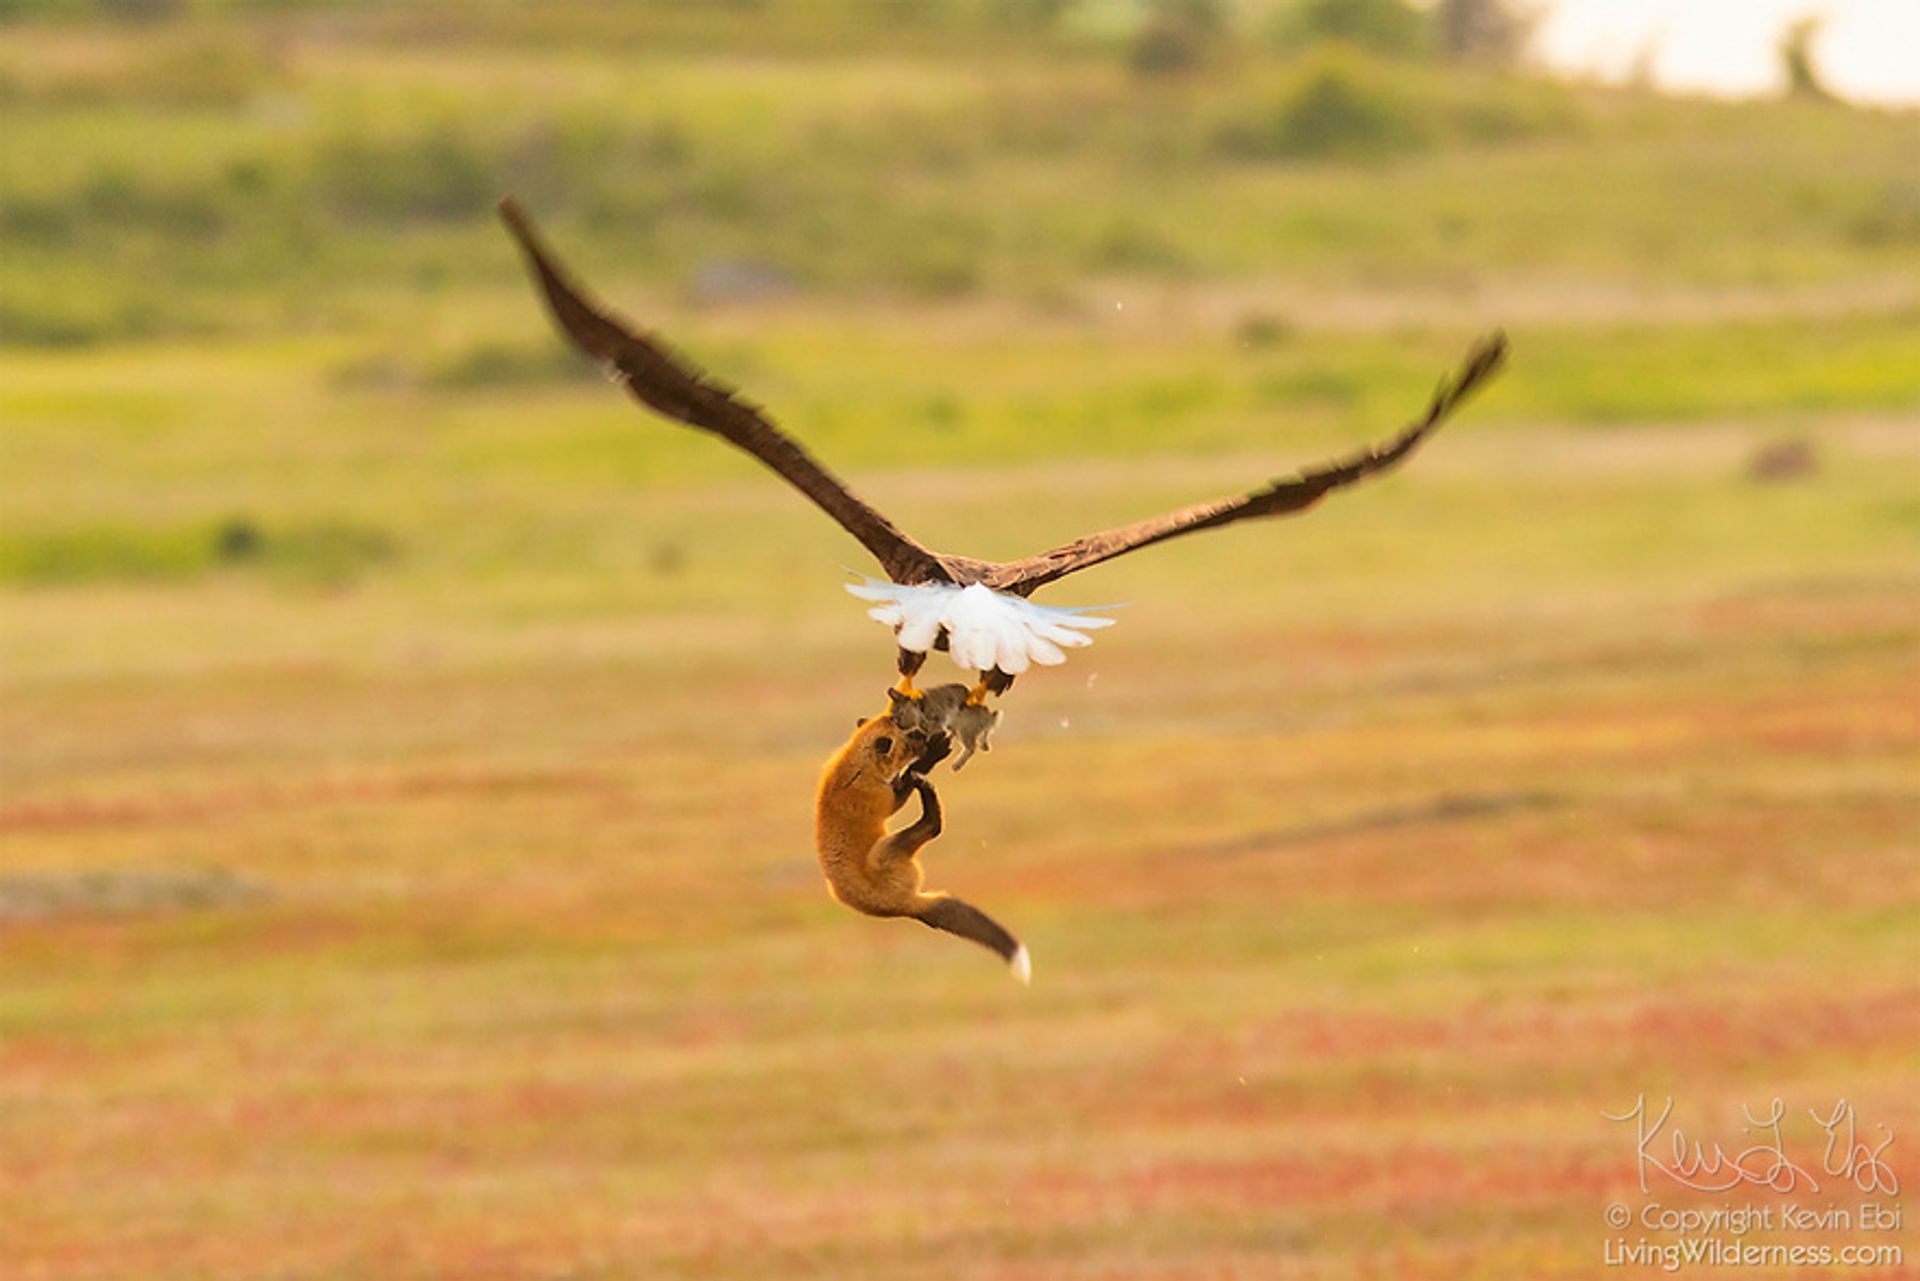 5b07de902f21f-wildlife-photography-eagle-fox-fighting-over-rabbit-kevin-ebi-14-5b0662f18d04a__880